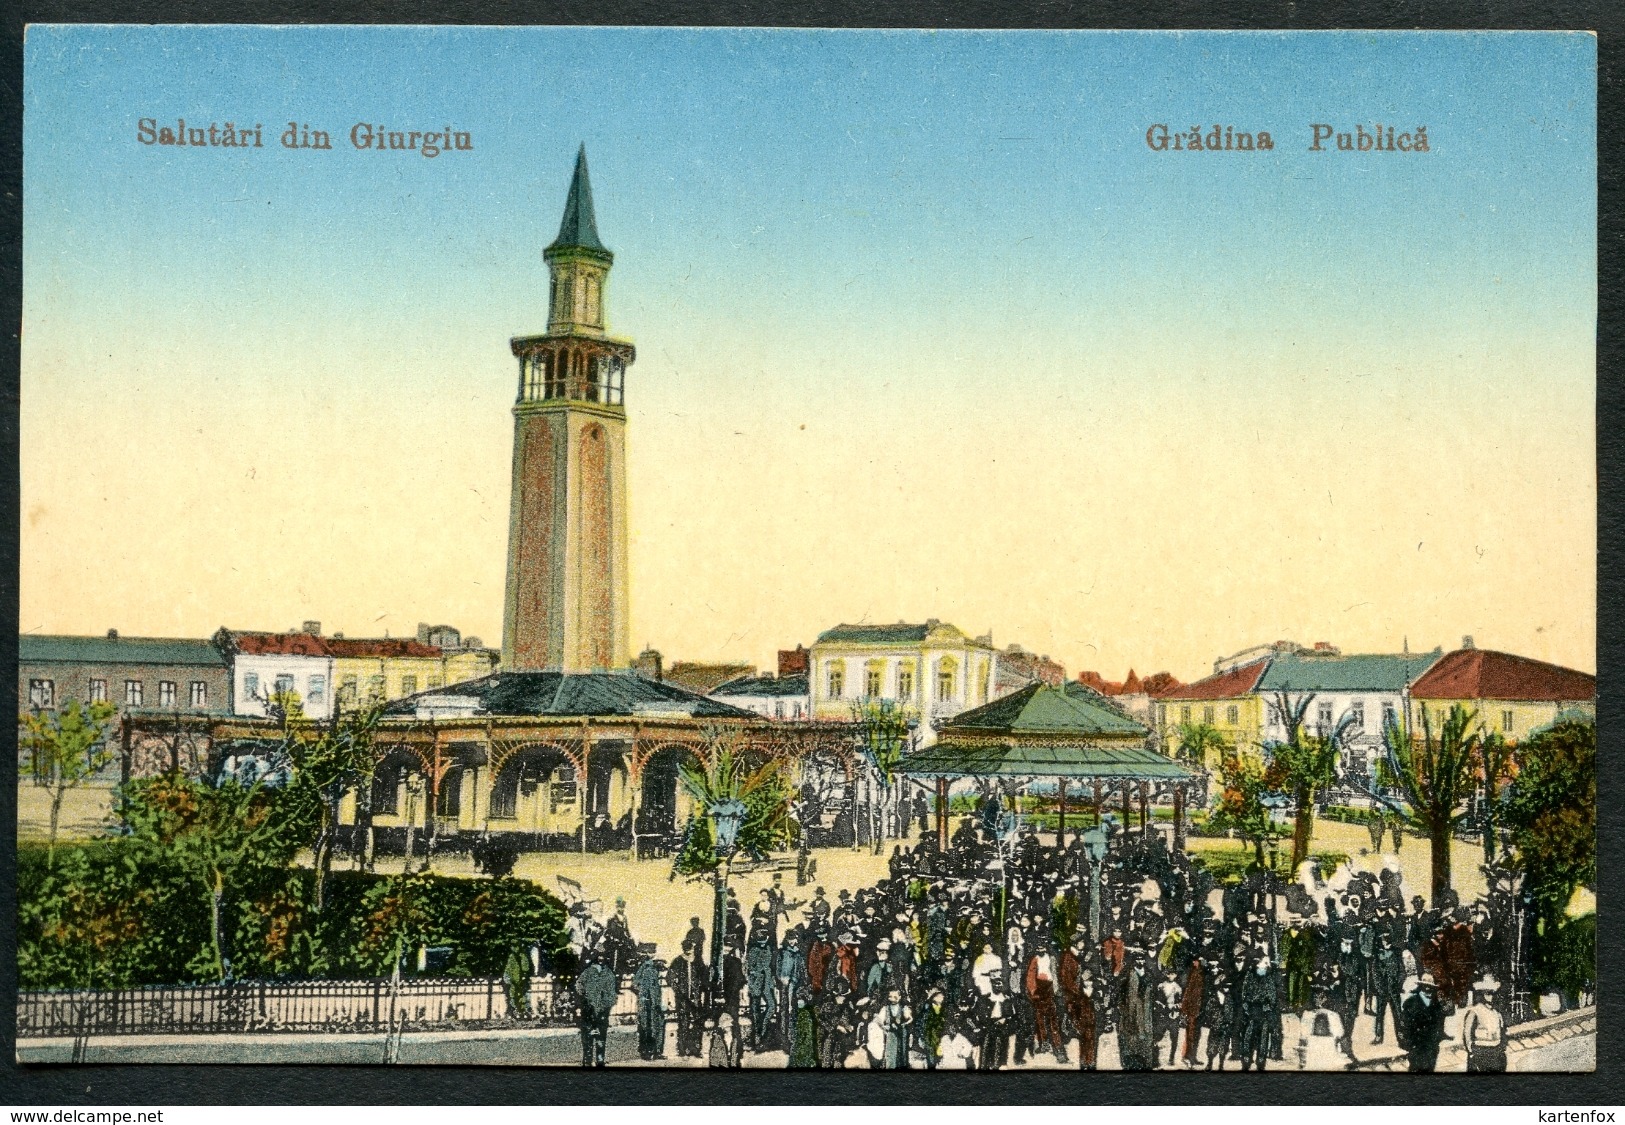 Giurgiu, Salutari Din, Gradina Publica, Um 1920, Große Walachei,Universal Saraga - Romania